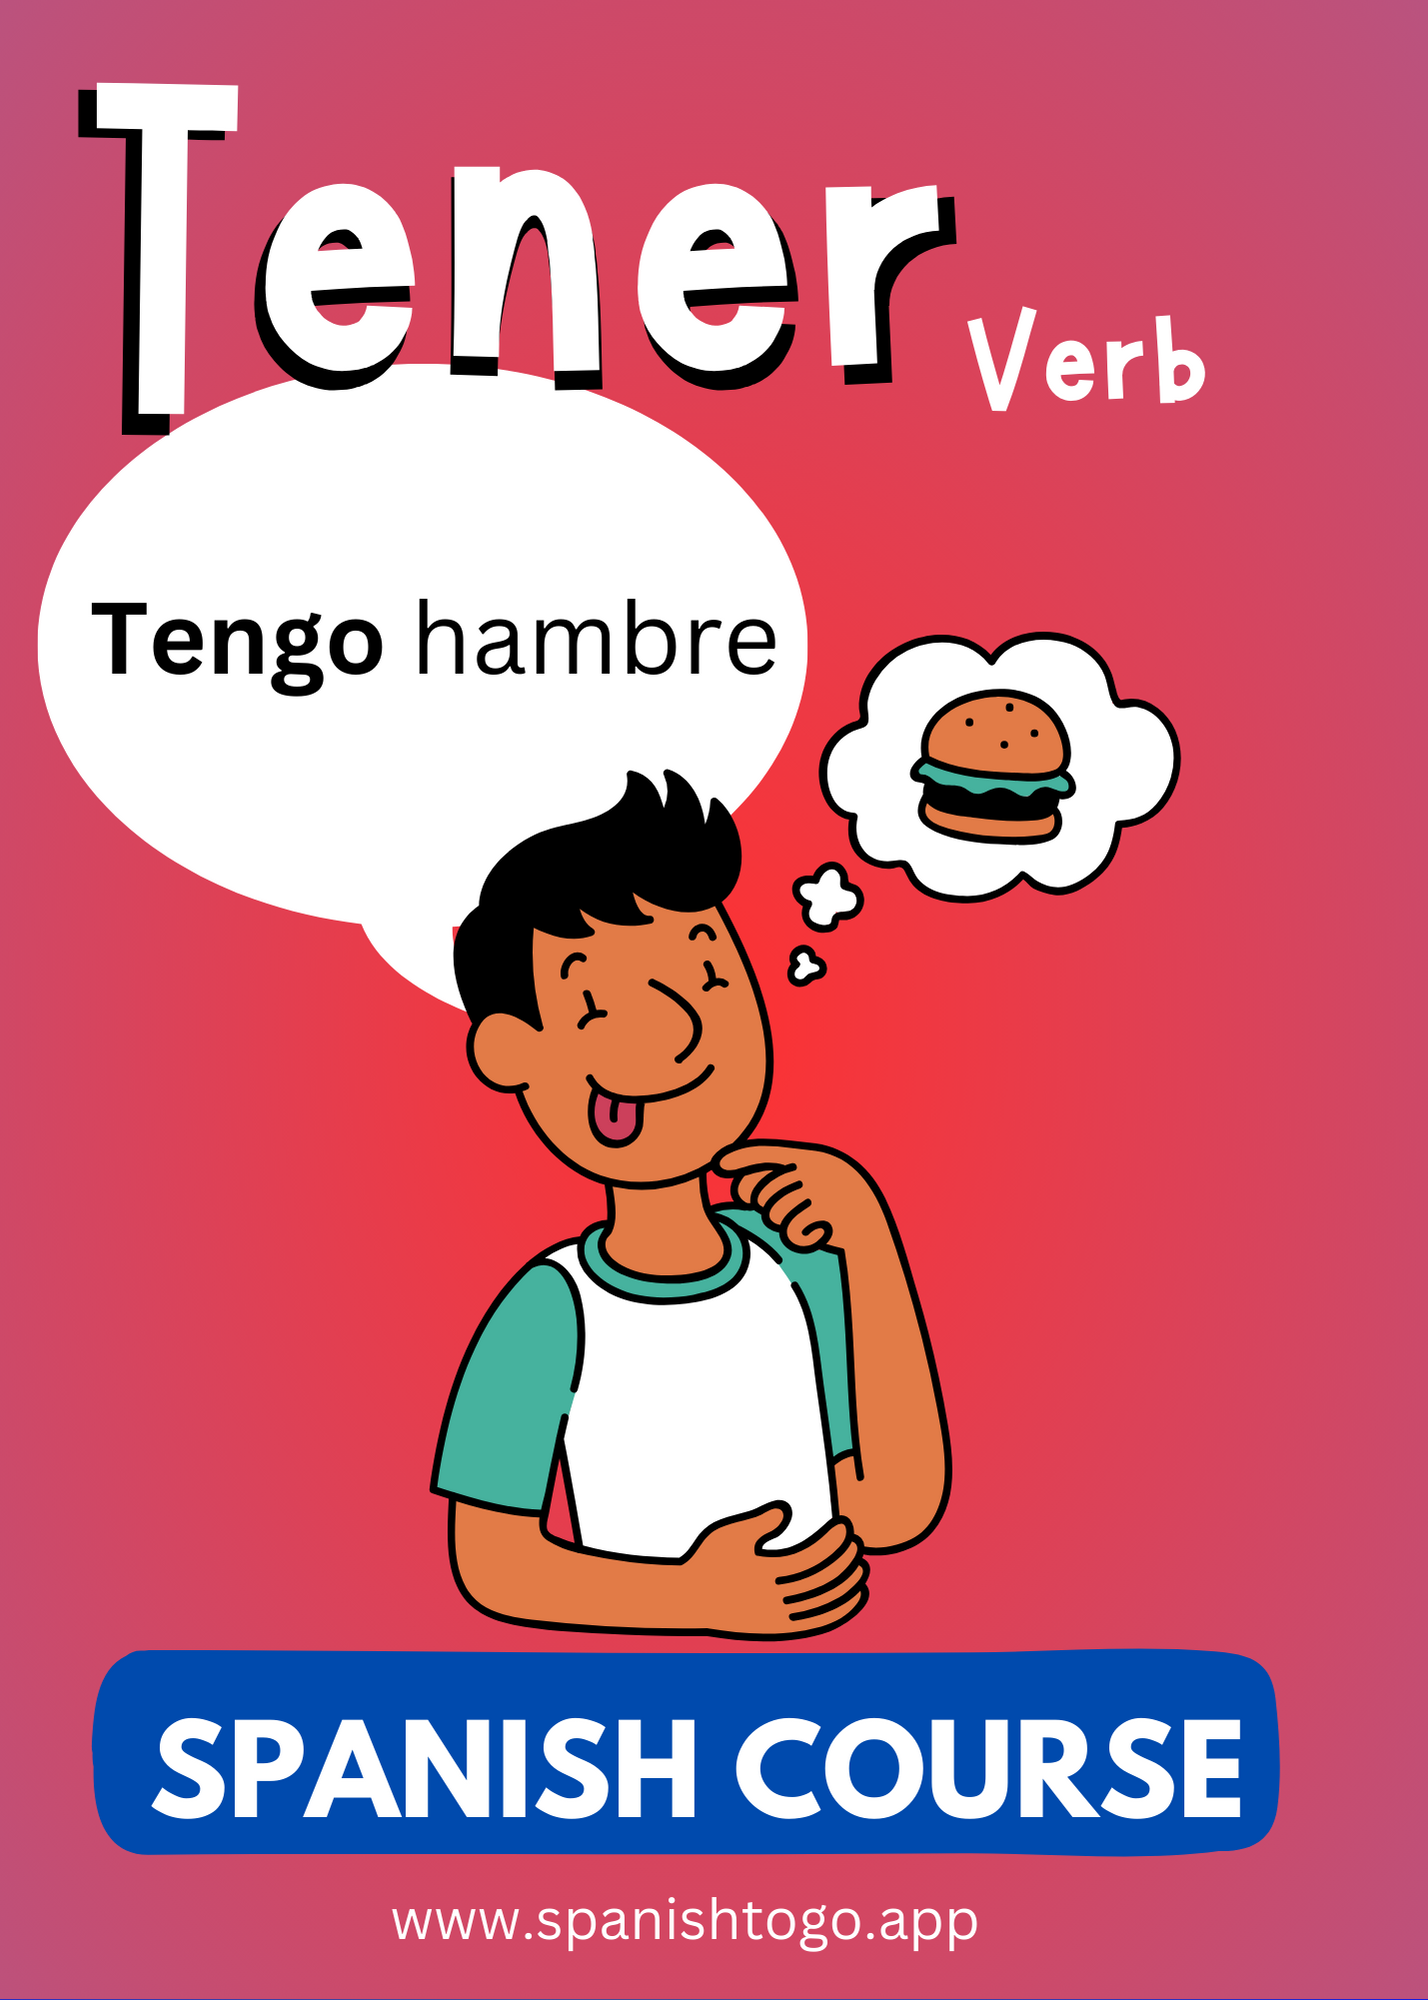 Conquer 'Tener': A Comprehensive Spanish Verb Course